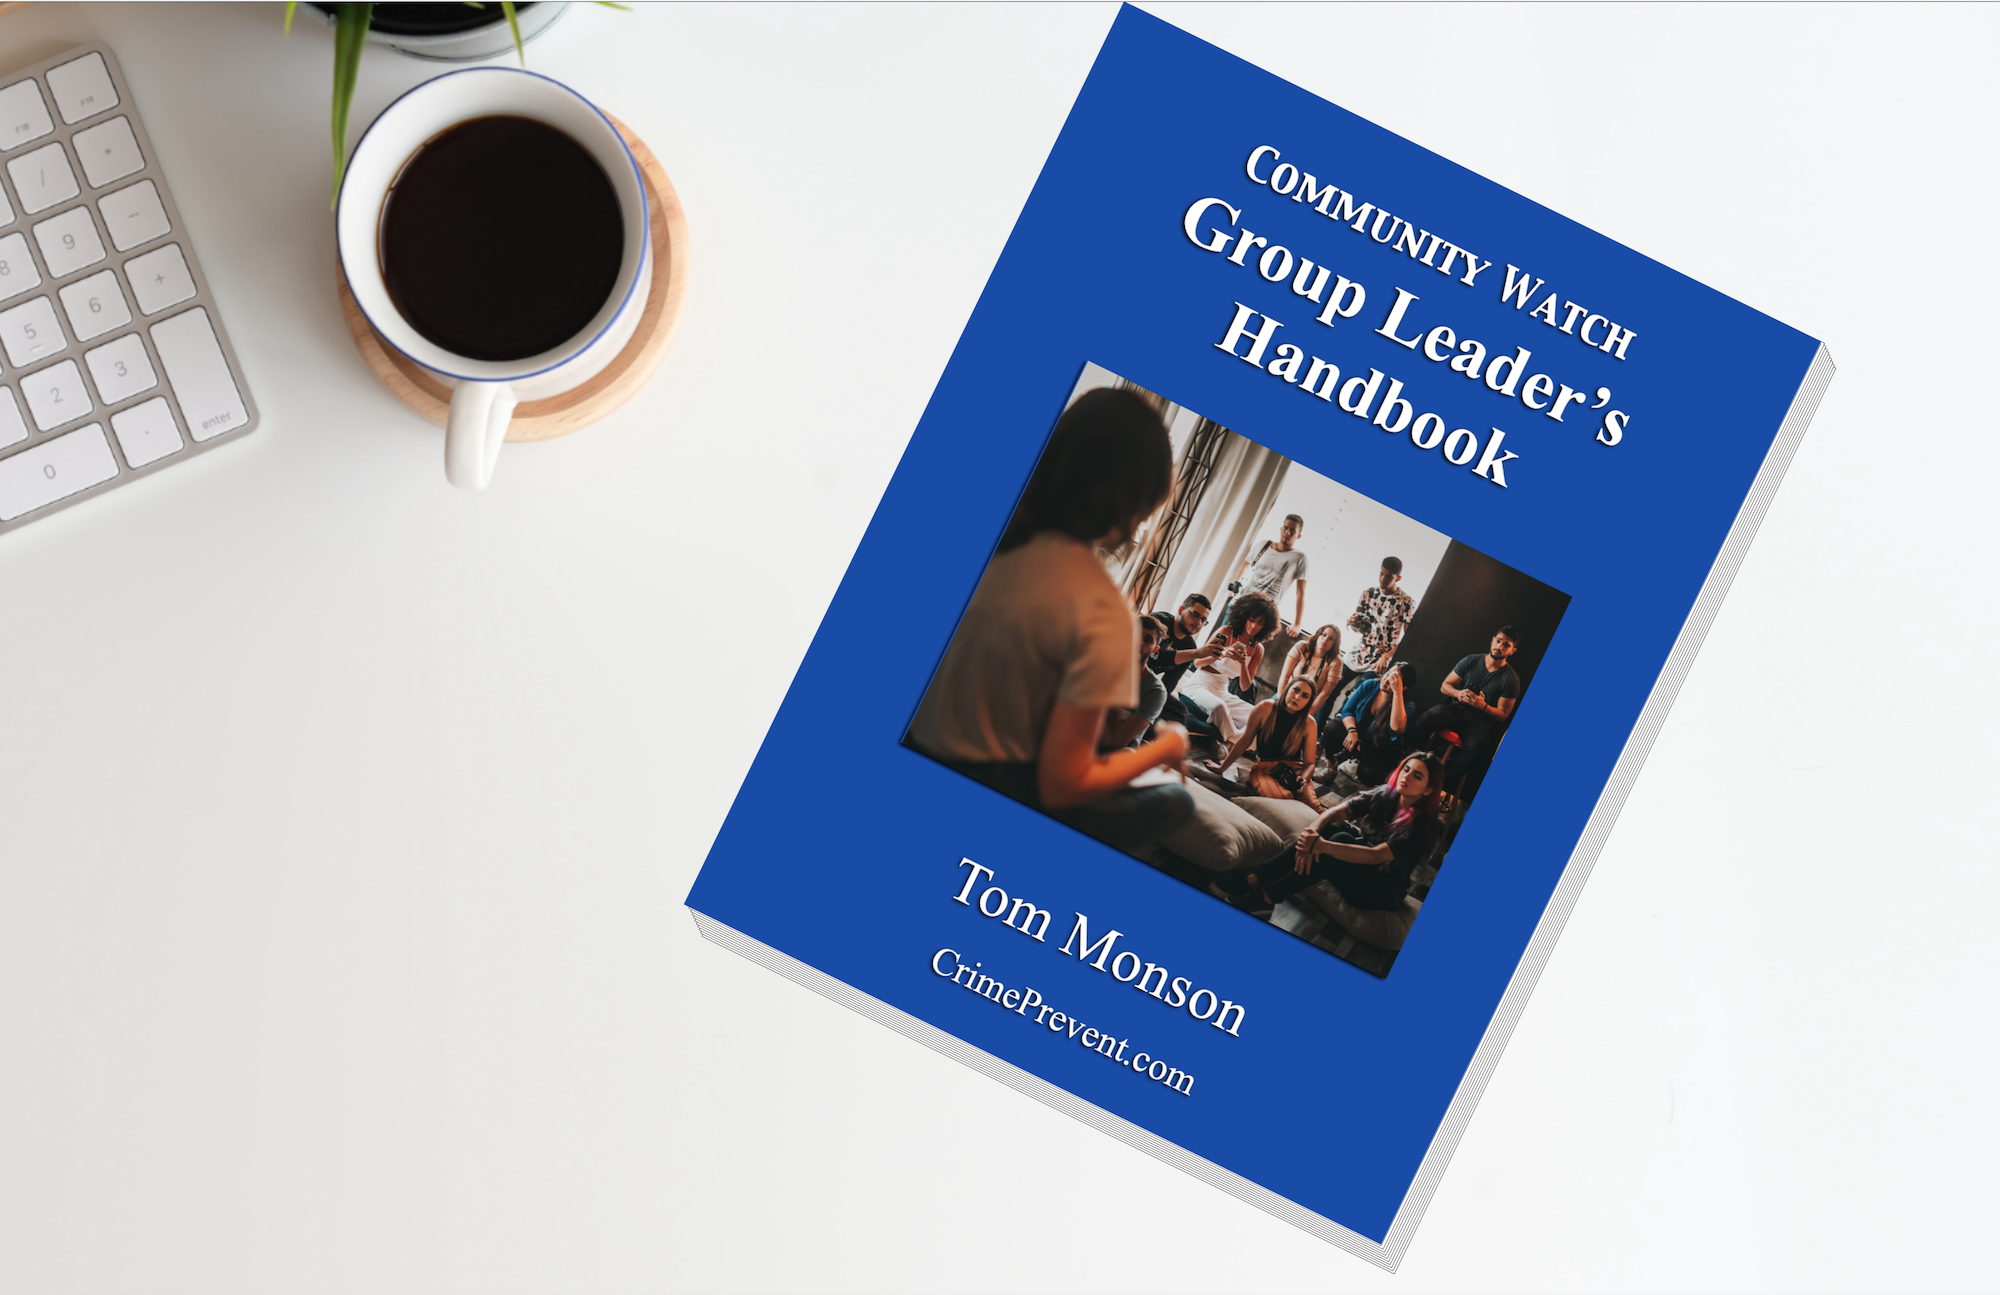 Group Leader's Handbook on Desk